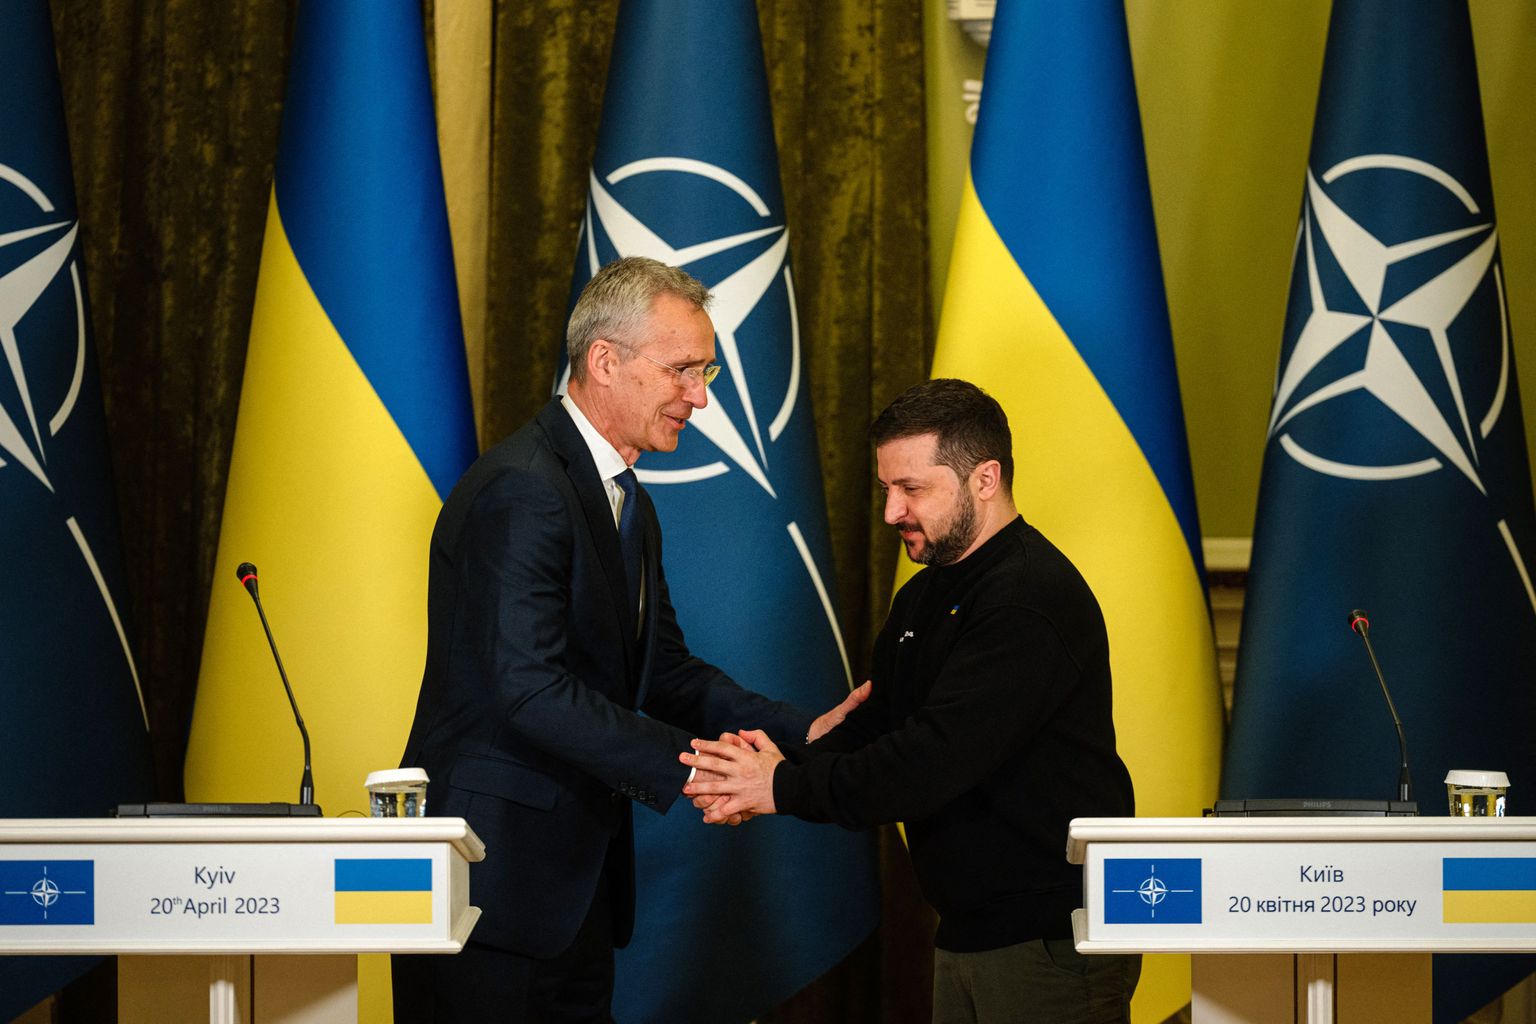 NATO peasekretär Jens Stoltenberg ja Ukraina president Volodõmõr Zelenskõi ühisel pressikonverentsil Kiievis 20. aprillil 2023